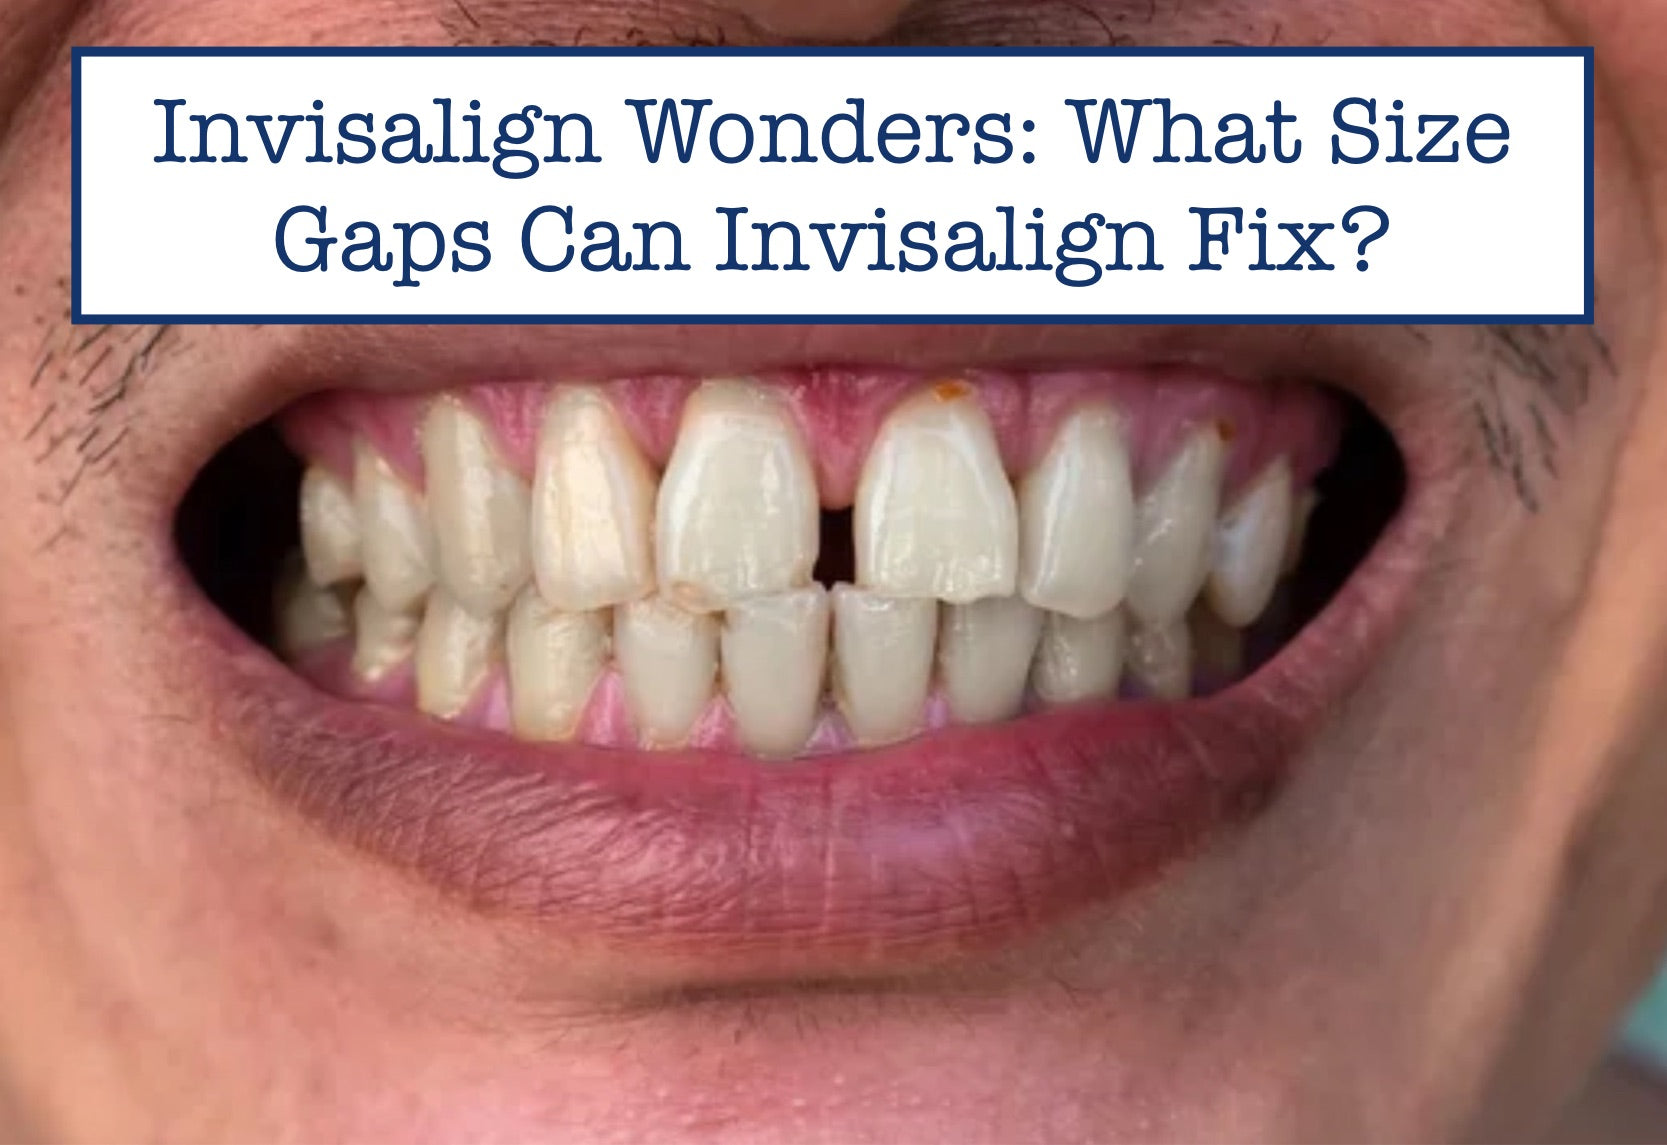 Invisalign Wonders: What Size Gaps Can Invisalign Fix?